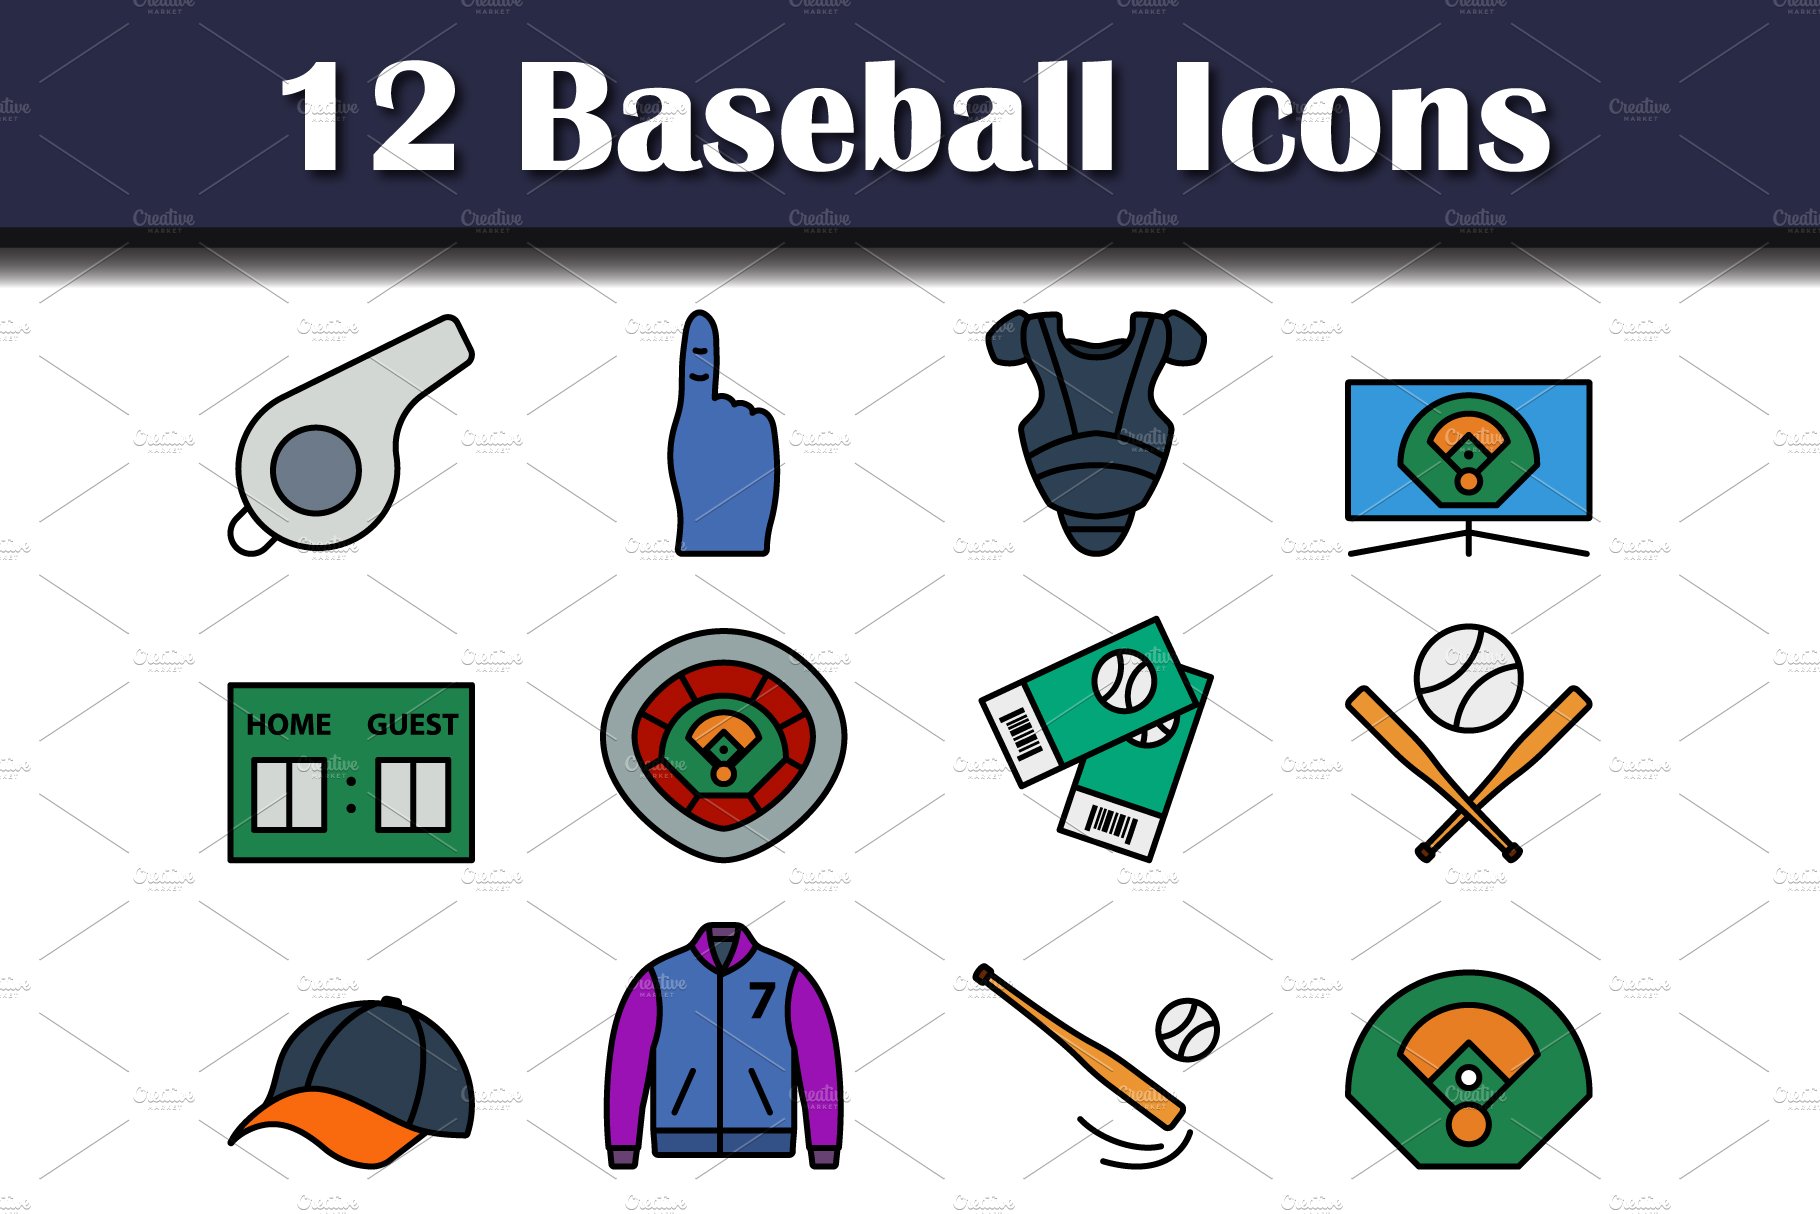 Baseball Icon Set cover image.